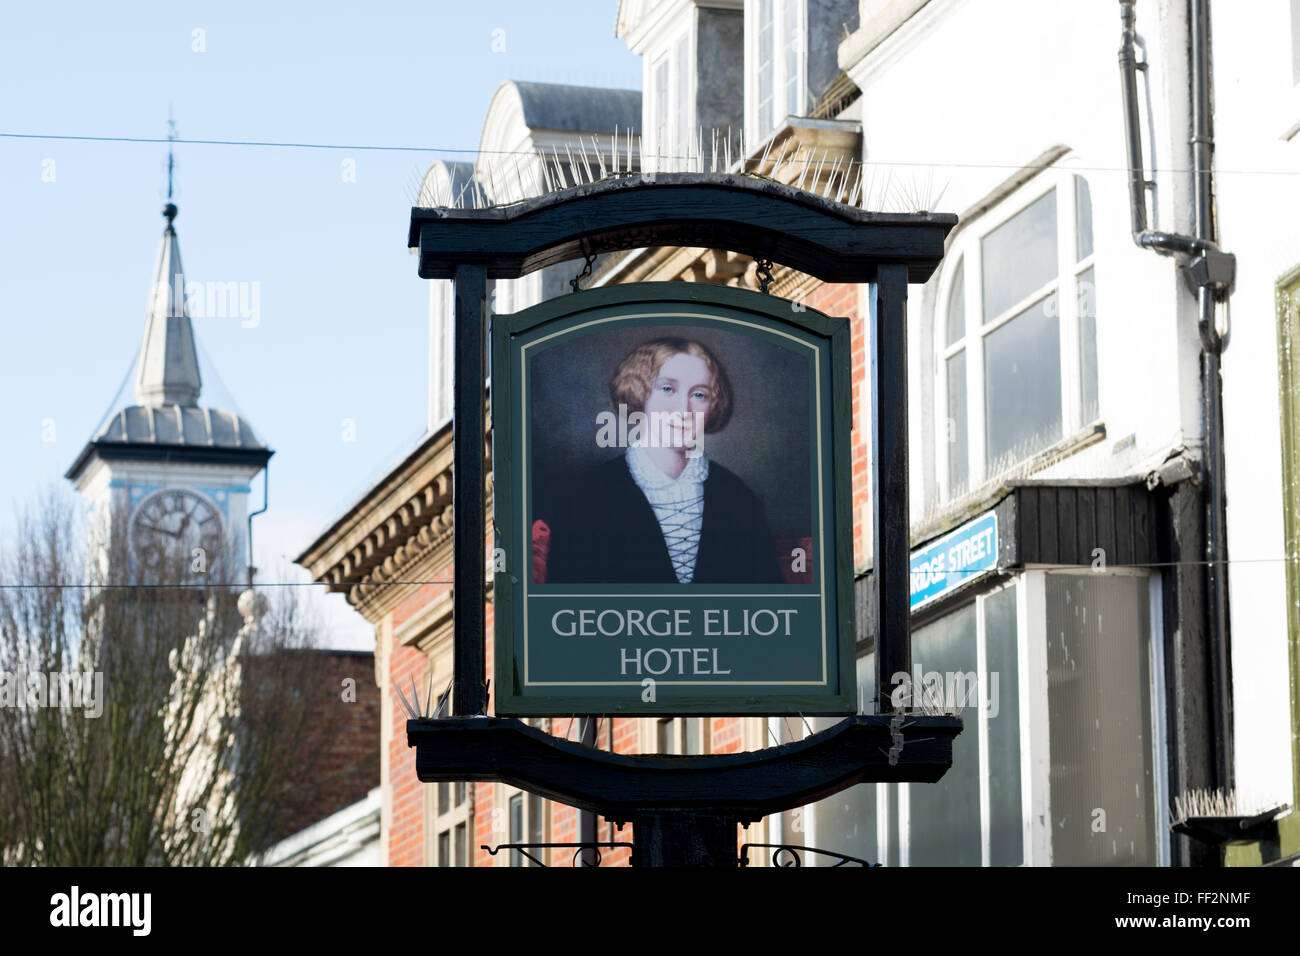 George Eliot Hotel sign, Nuneaton, Warwickshire, UK Stock Photo